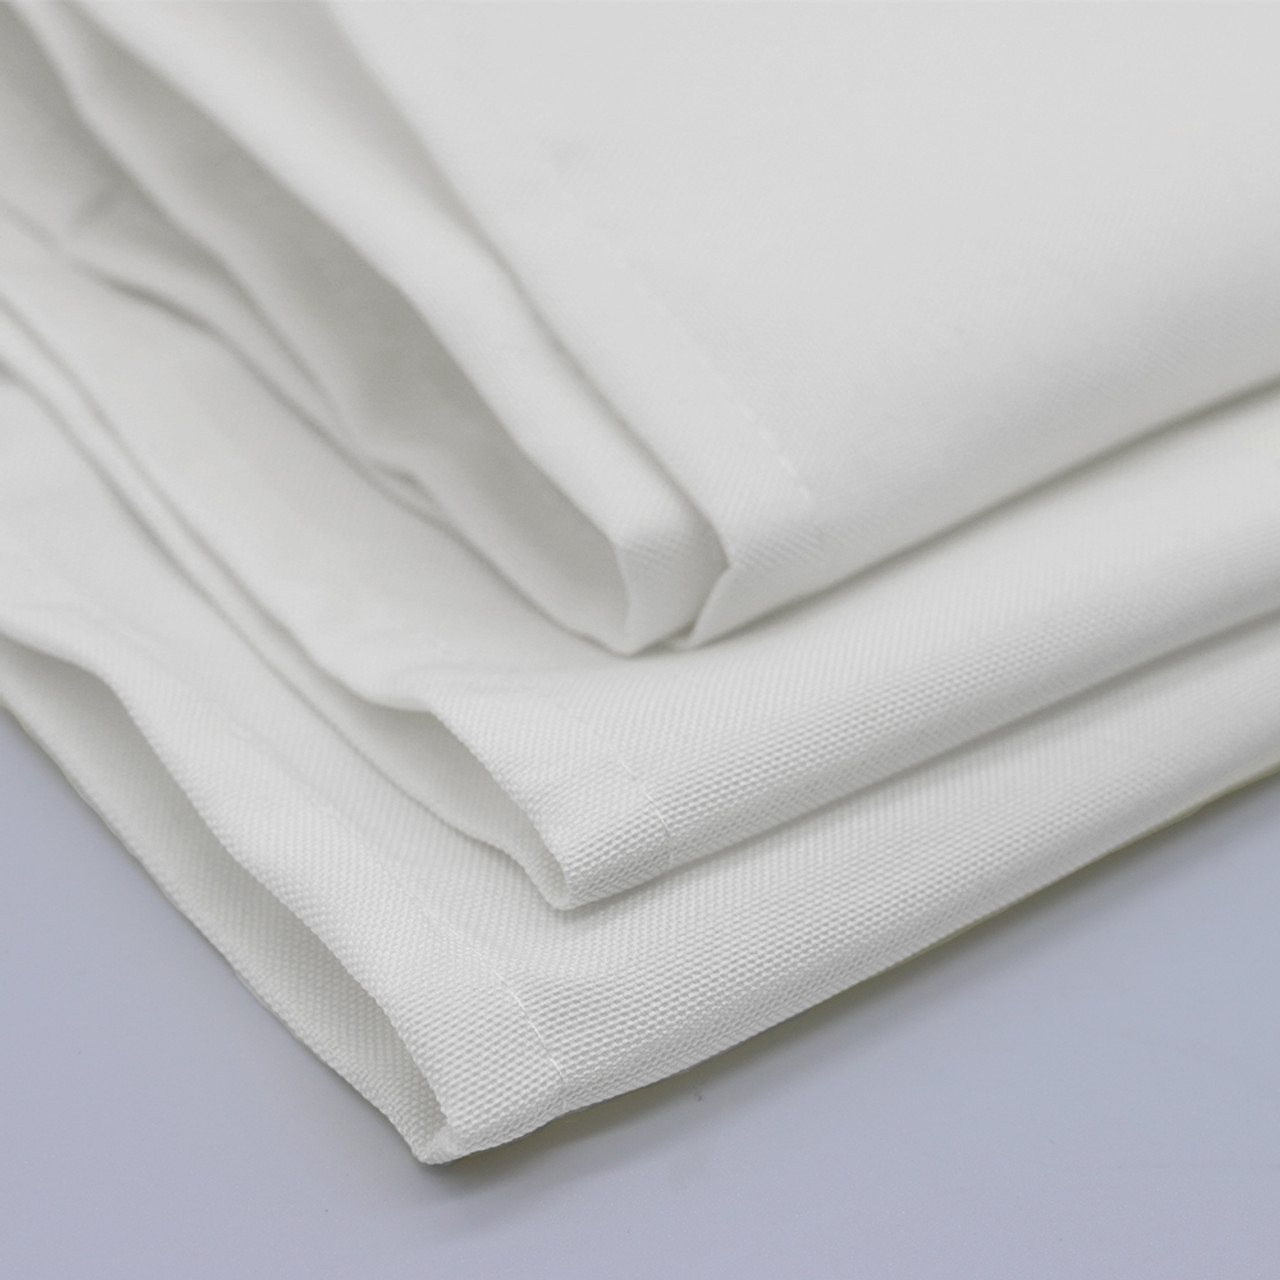 Choice 20 x 20 White 100% Spun Polyester Hemmed Cloth Napkins - 300/Case